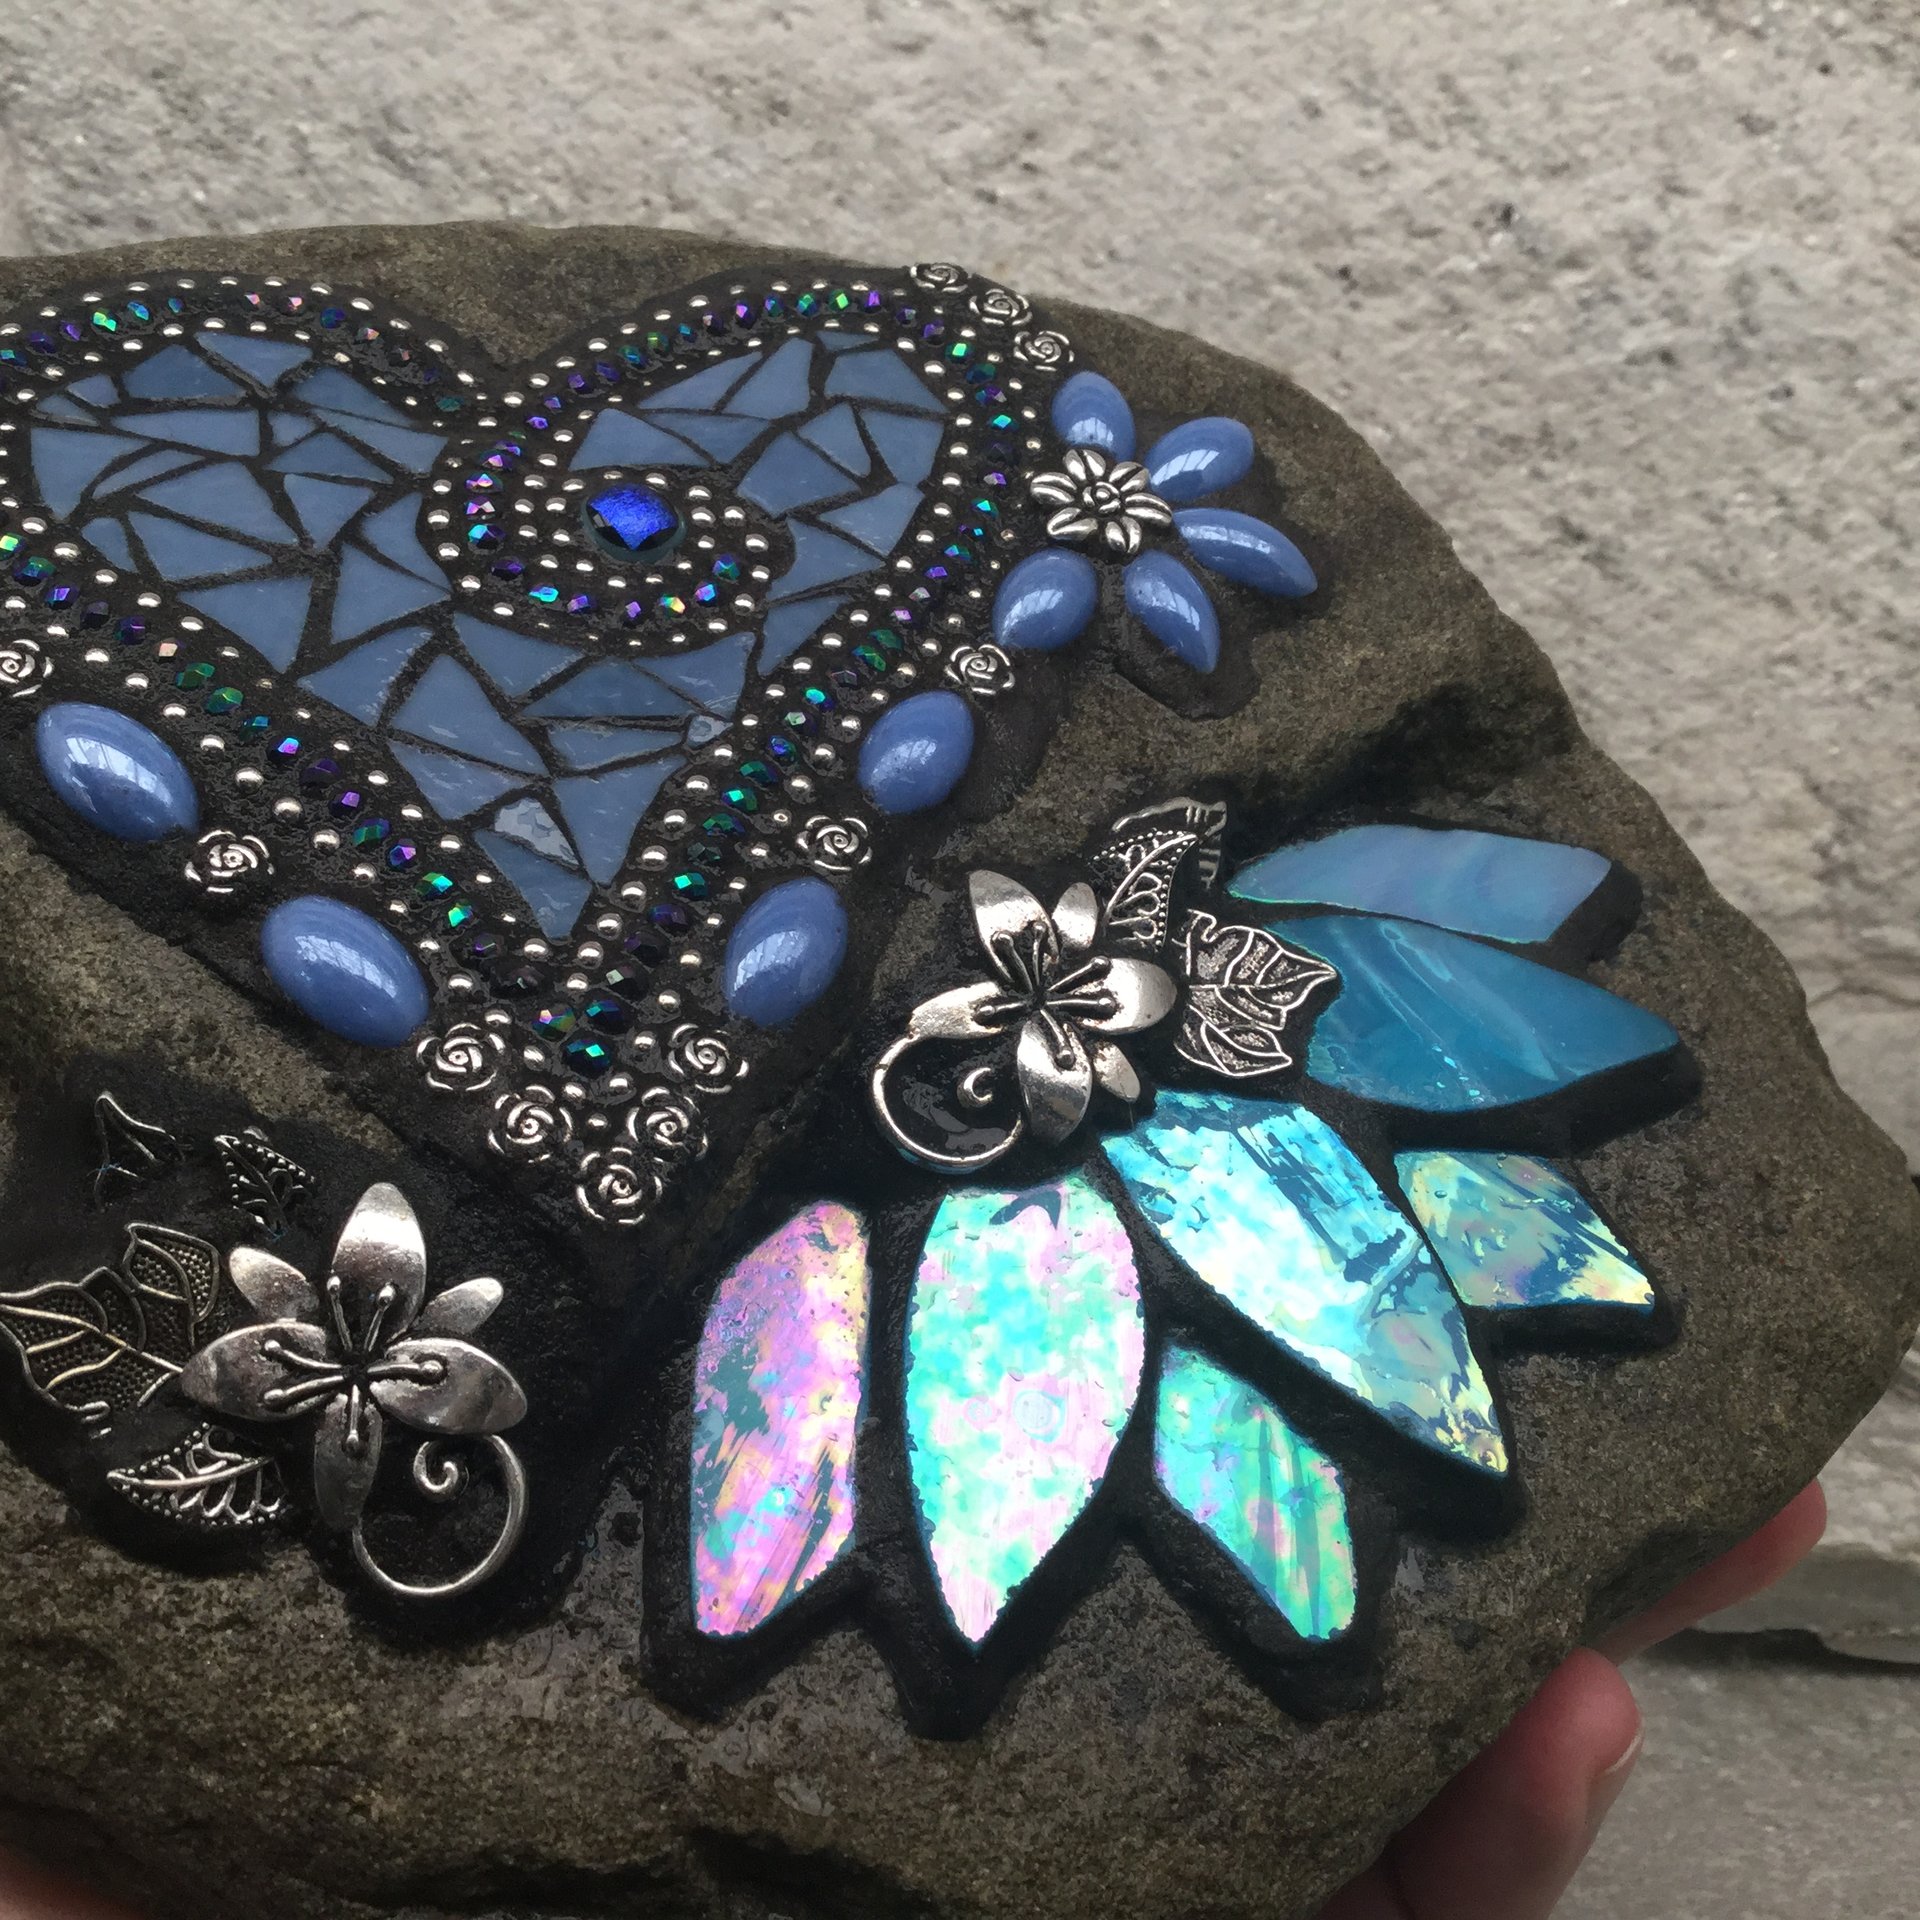 Denim Blue Heart with Iridescent Blue Lily Mosaic Garden Stone, Home and Garden Decor, Gardening Gift,